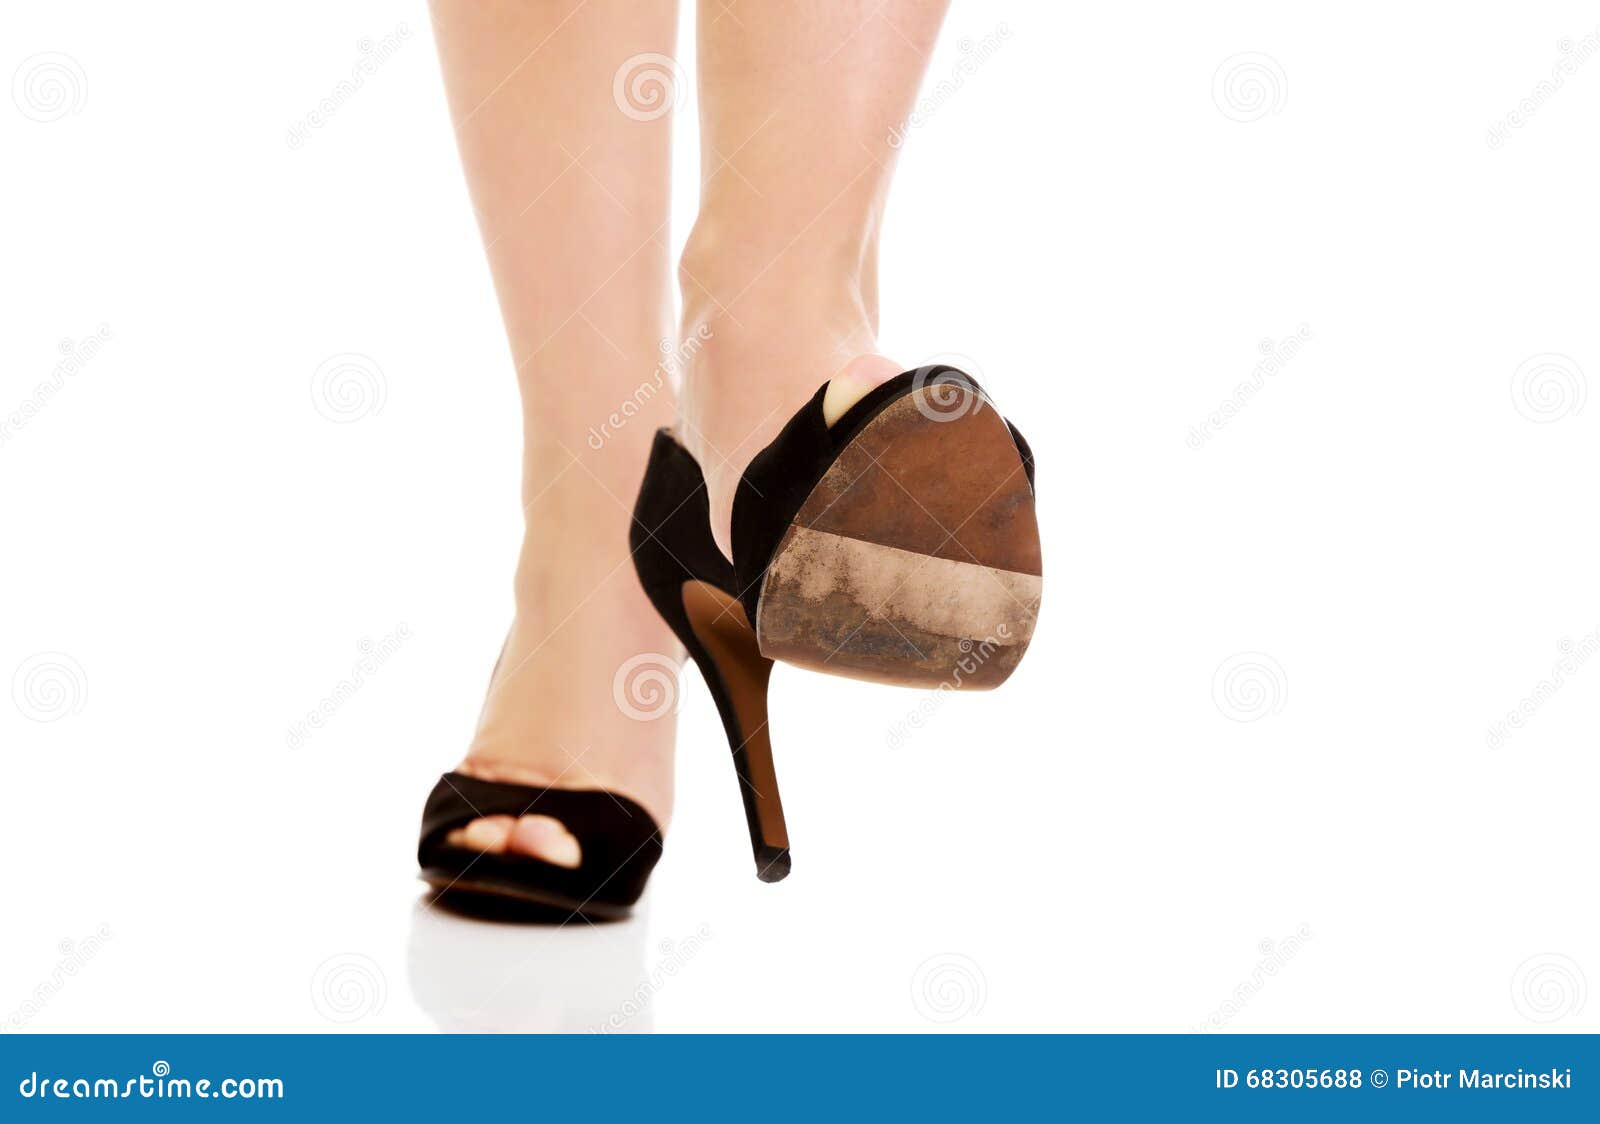 badrul muzaffar share hard high heel trample photos